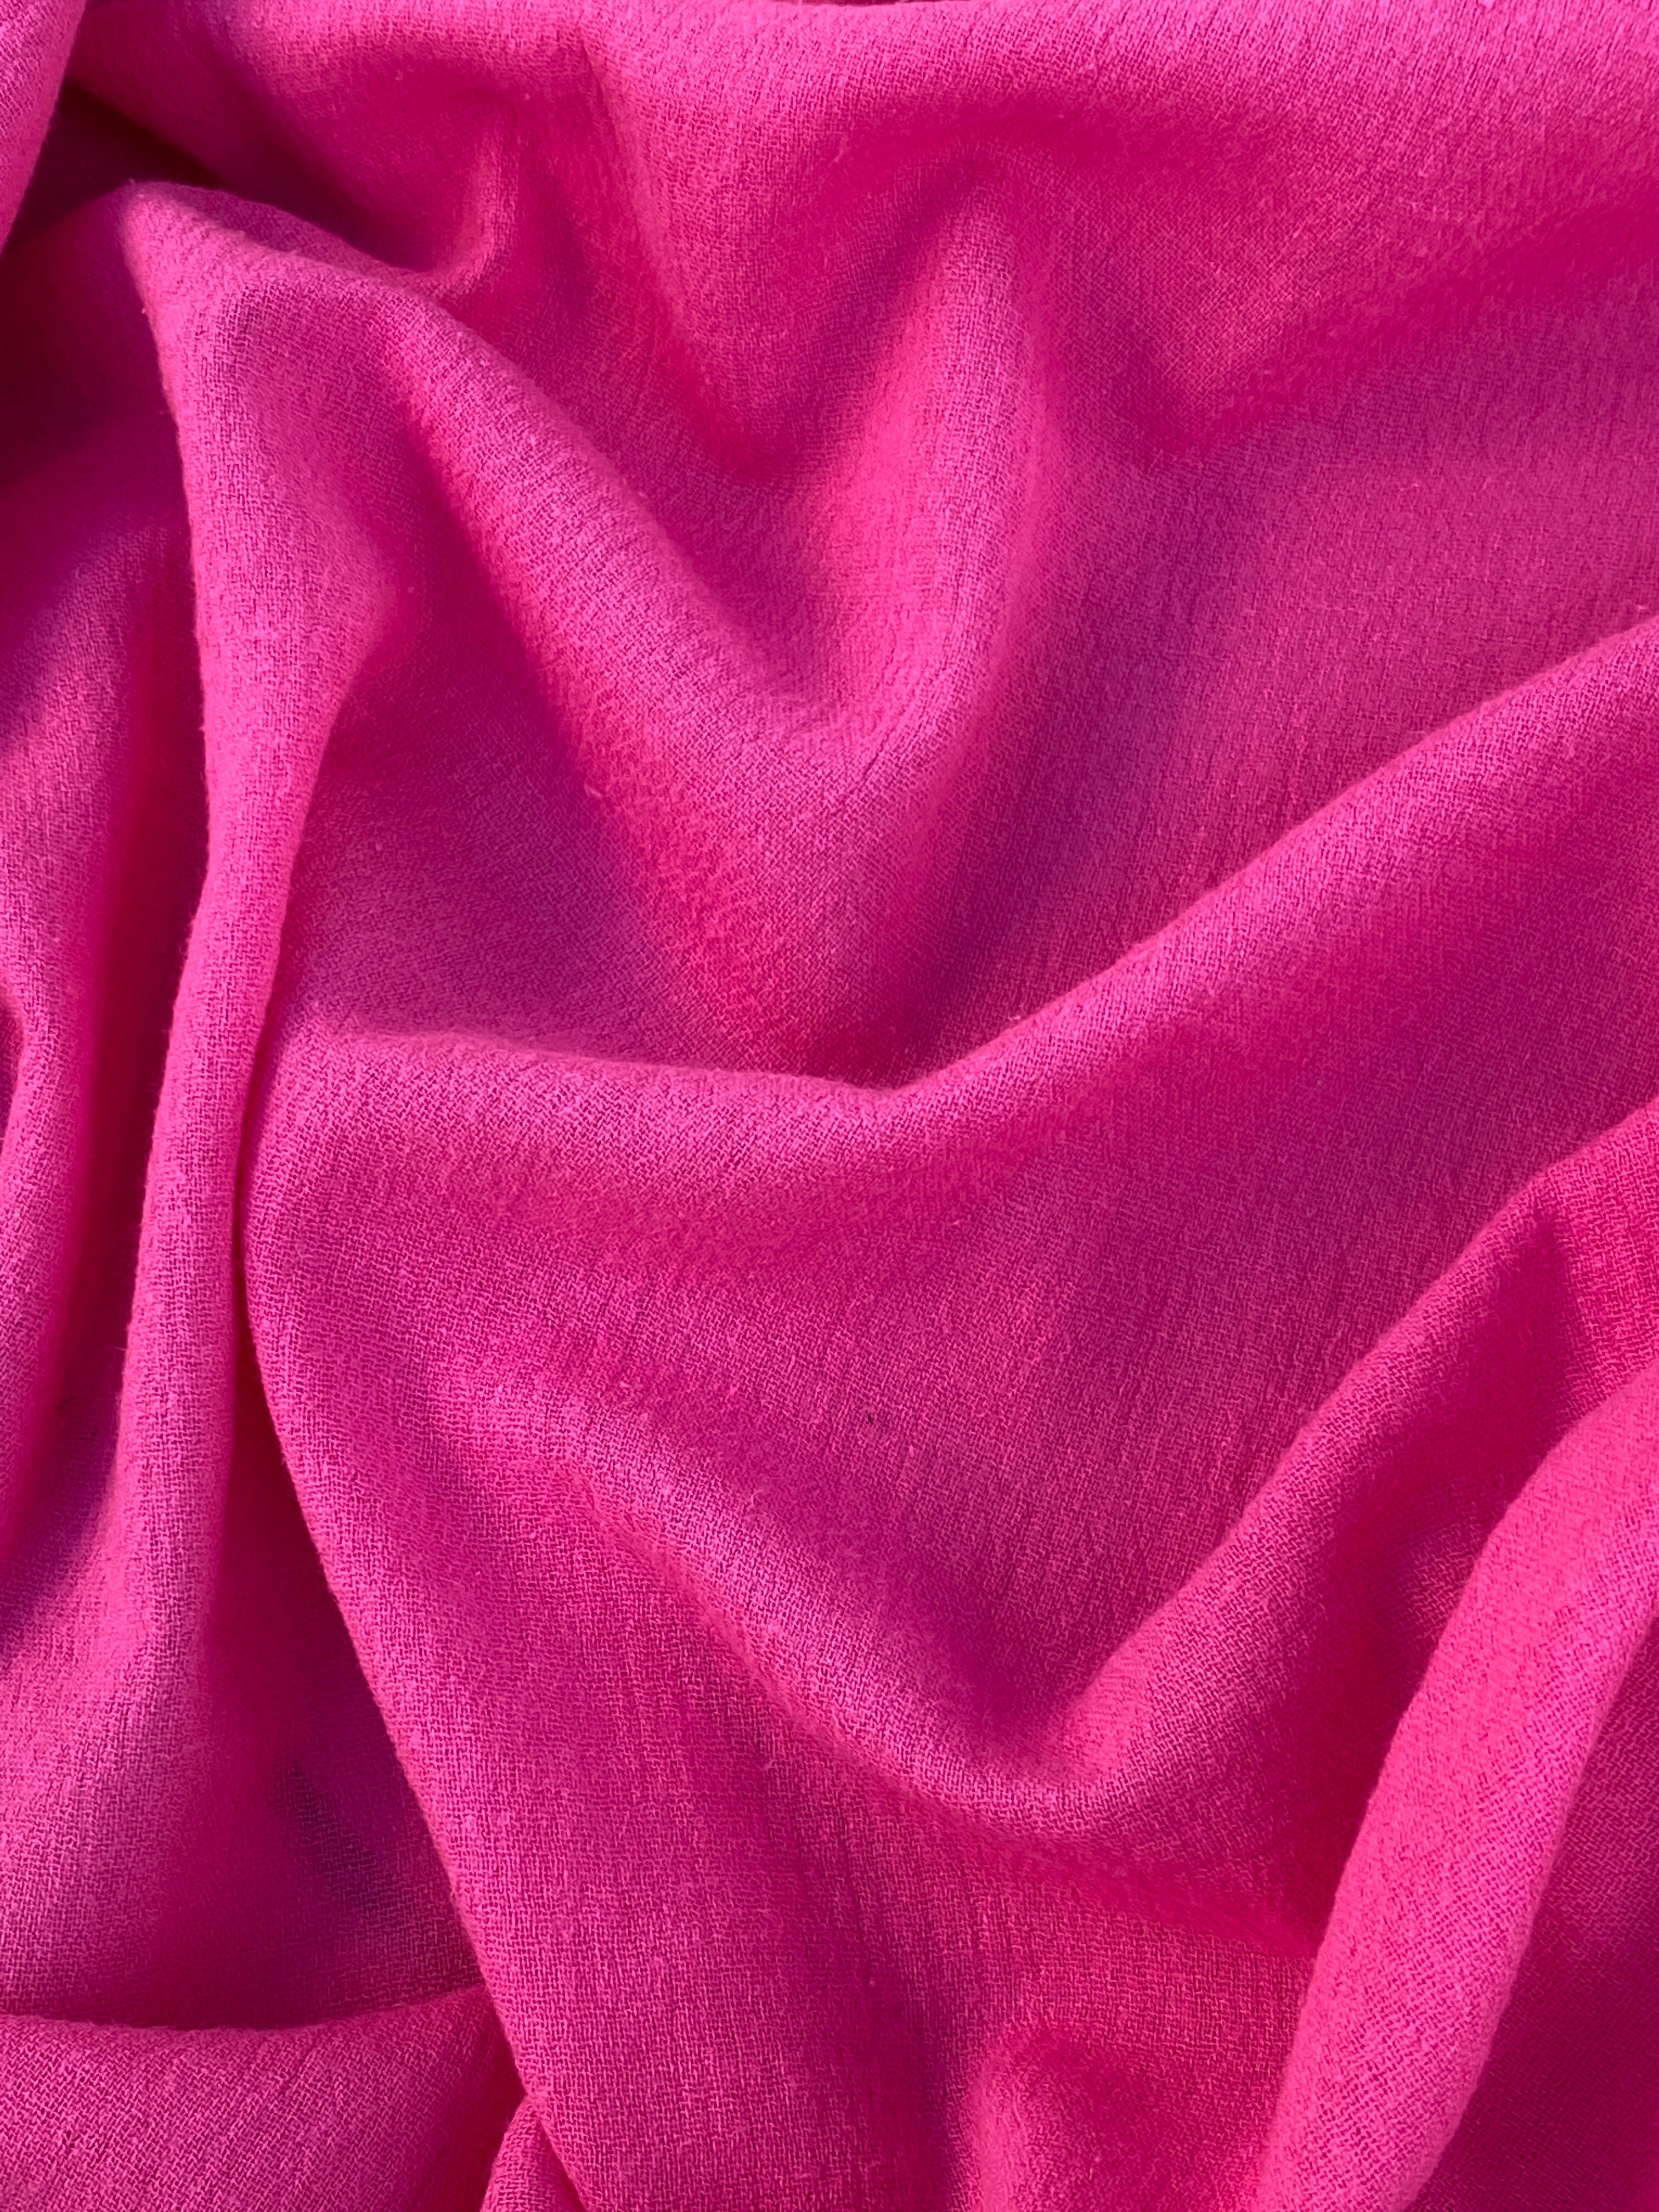 Fuchsia cotton gauze, hot pink cotton gauze,  hot pink crinkle gauze, textured gauze, sheer gauze pink, pink gauze fabric